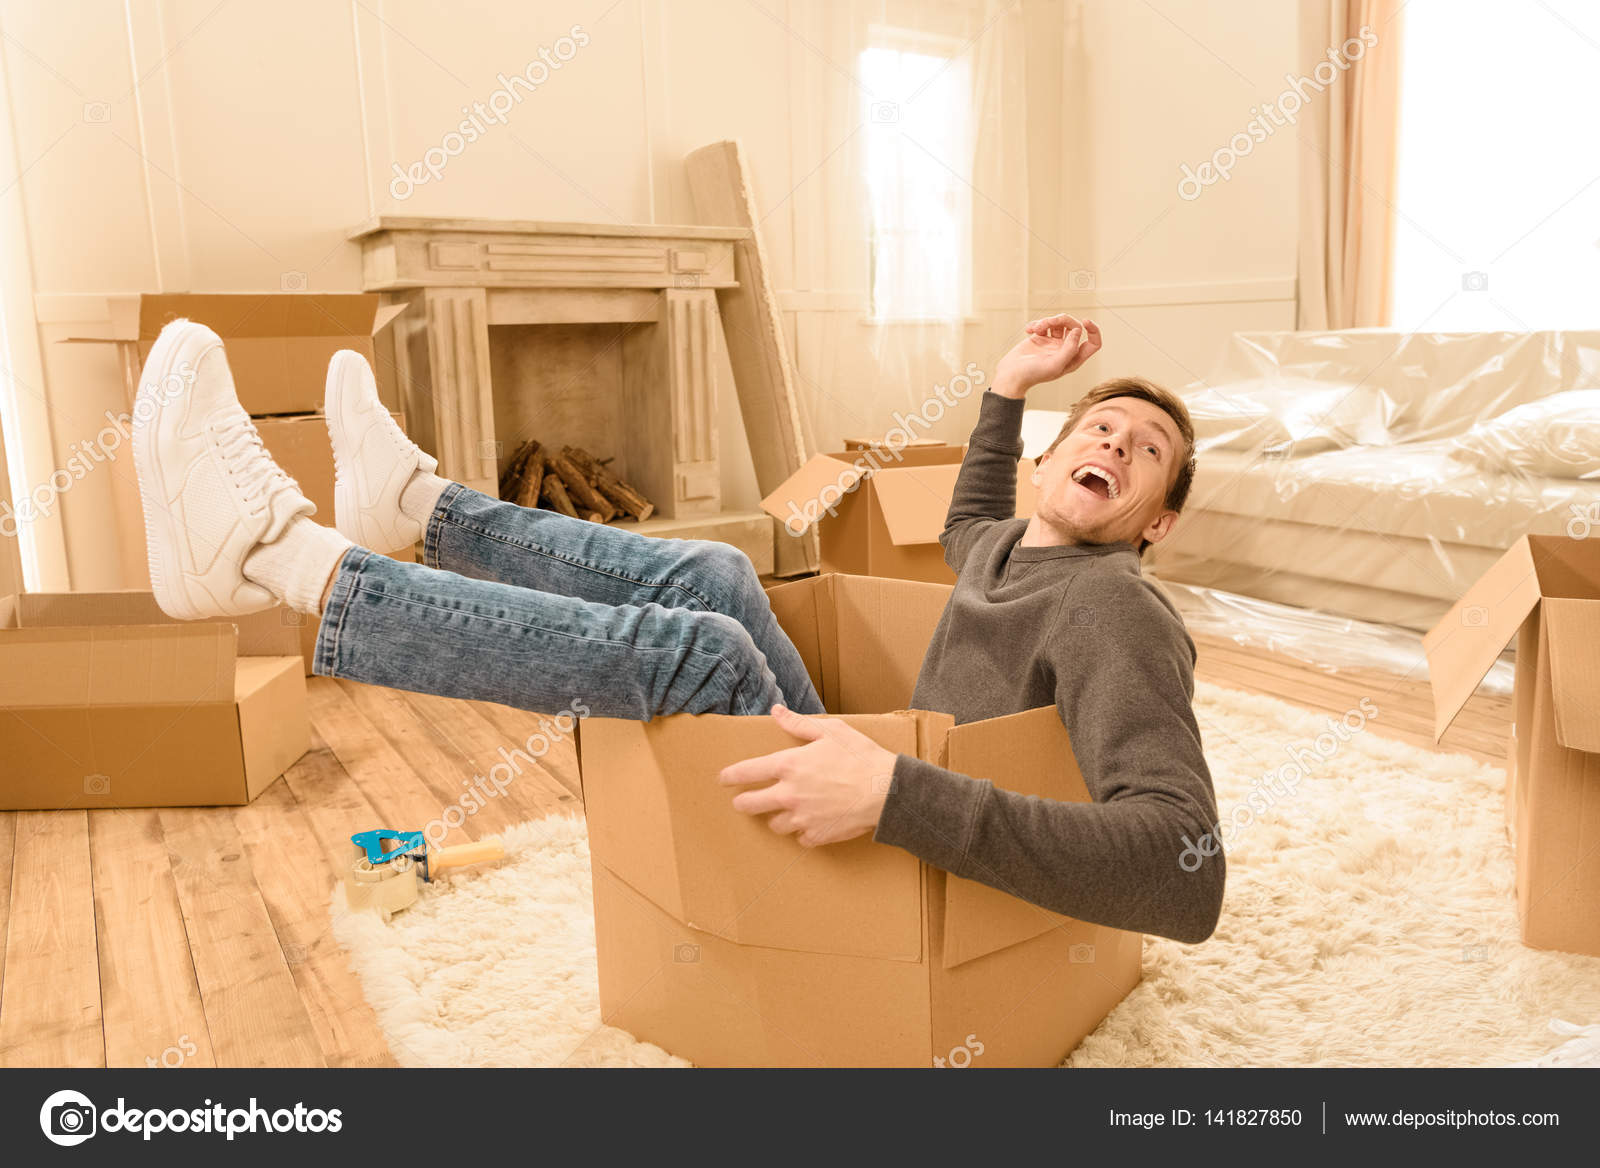 https://st3.depositphotos.com/10638998/14182/i/1600/depositphotos_141827850-stock-photo-man-sitting-in-cardboard-box.jpg